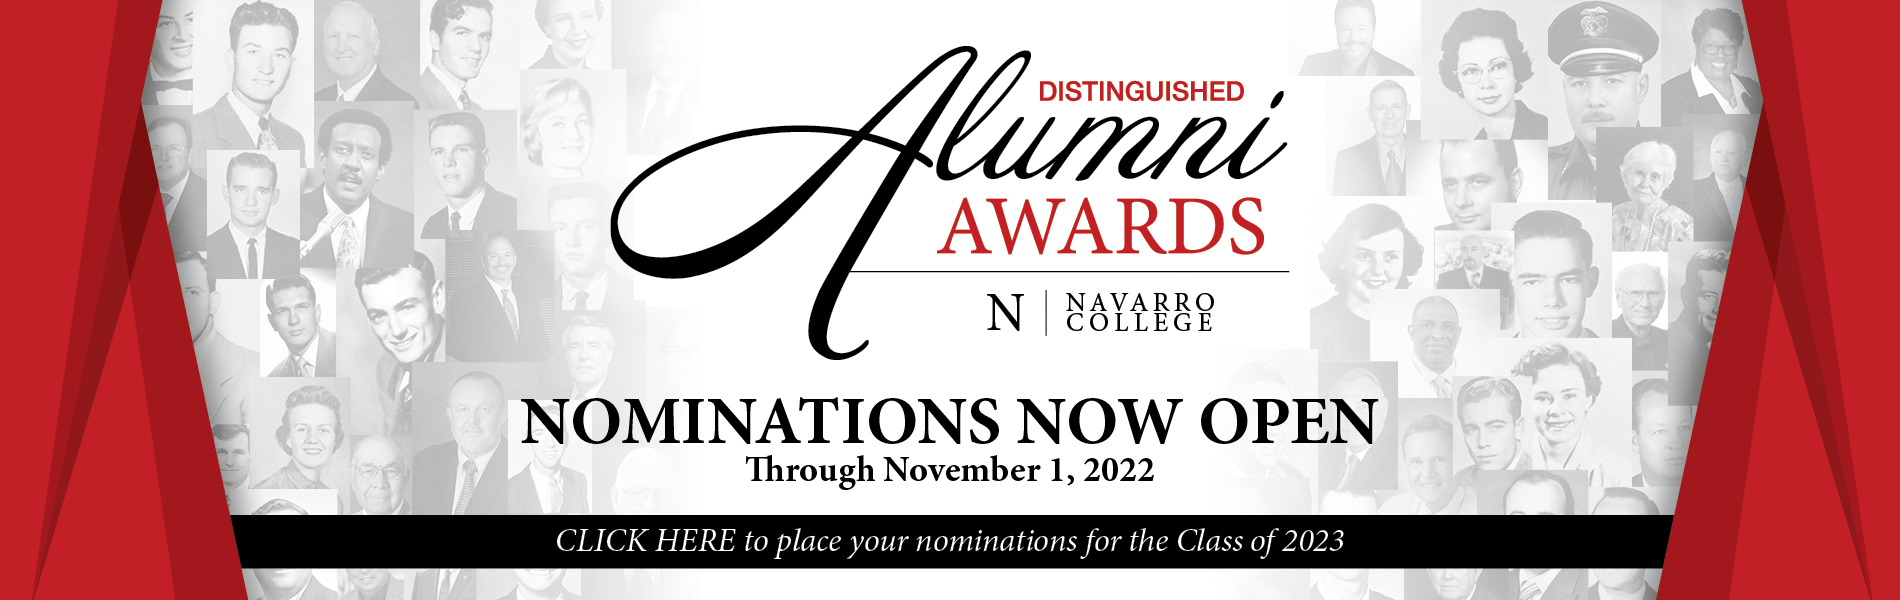 Distinguished Alumni Nominations Open